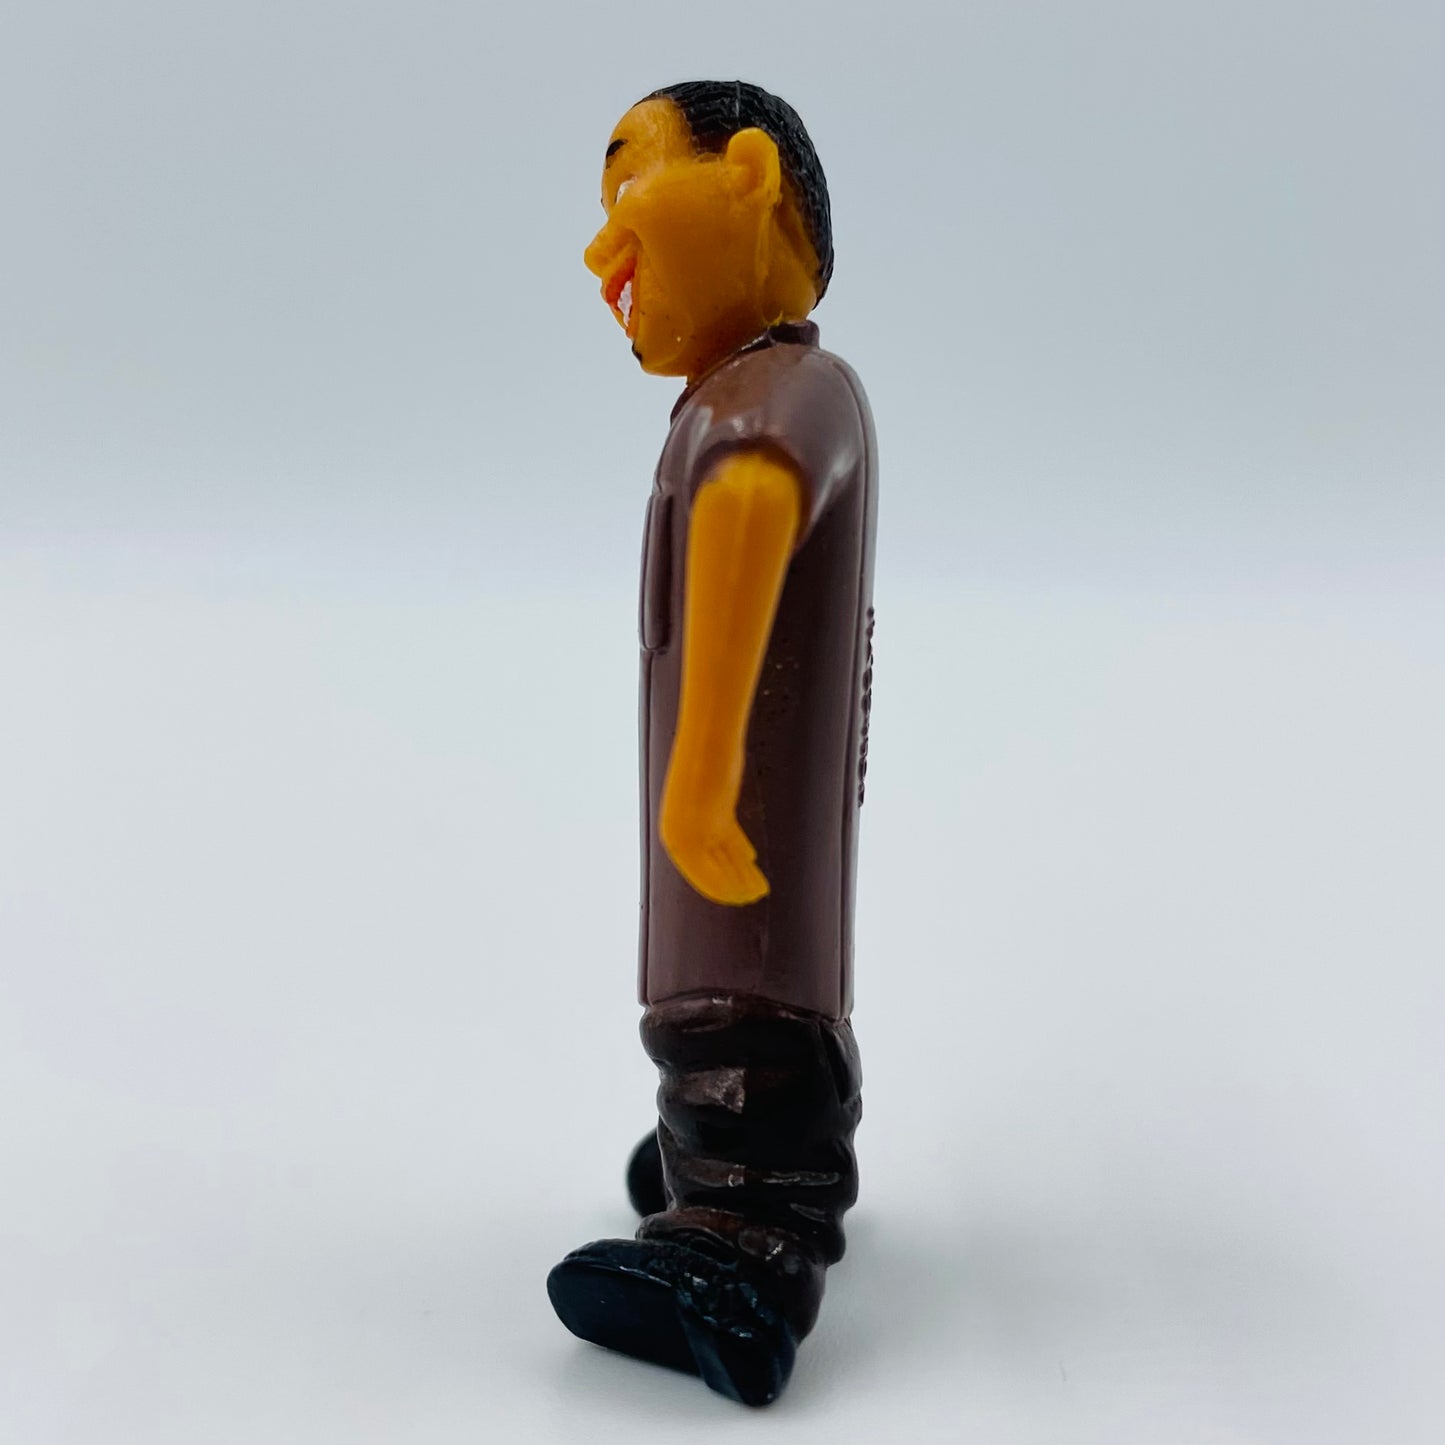 Homies series 6 Puppet loose 2” figurine (2003)